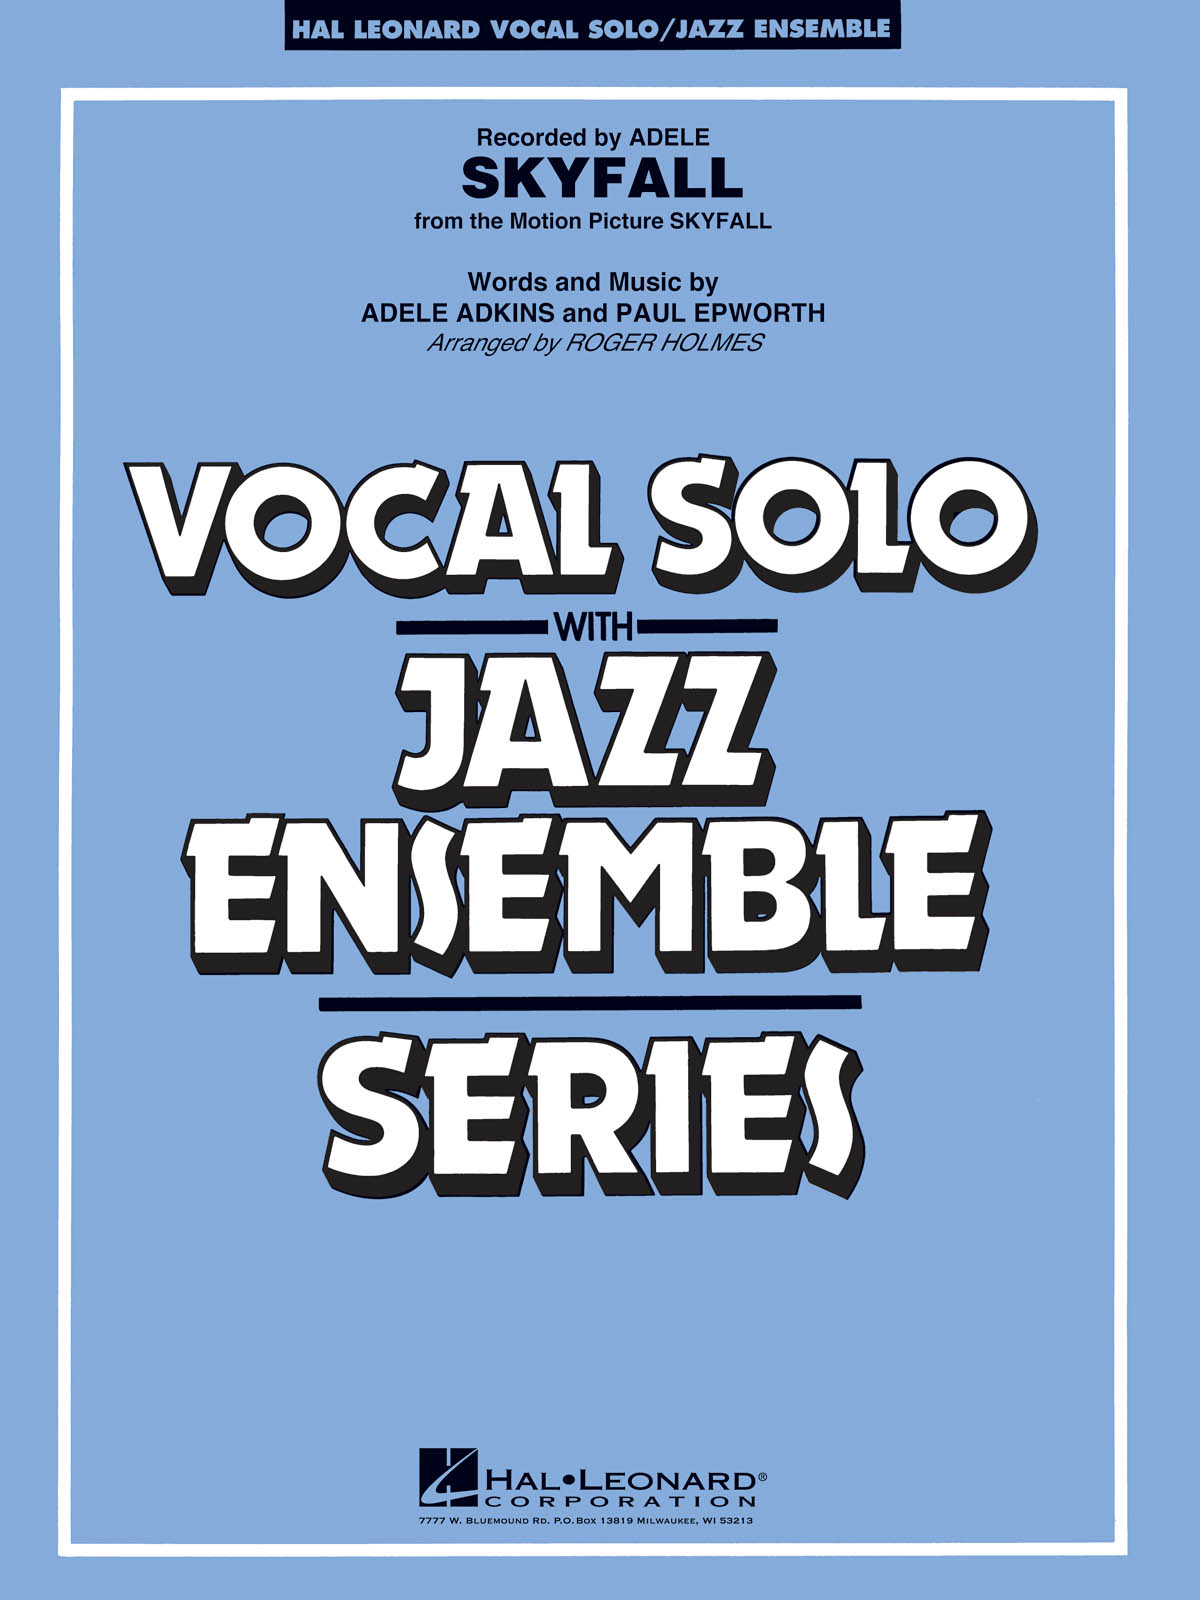 Paul Epworth: Skyfall [Key: Cmi]: Jazz Ensemble and Vocal: Score